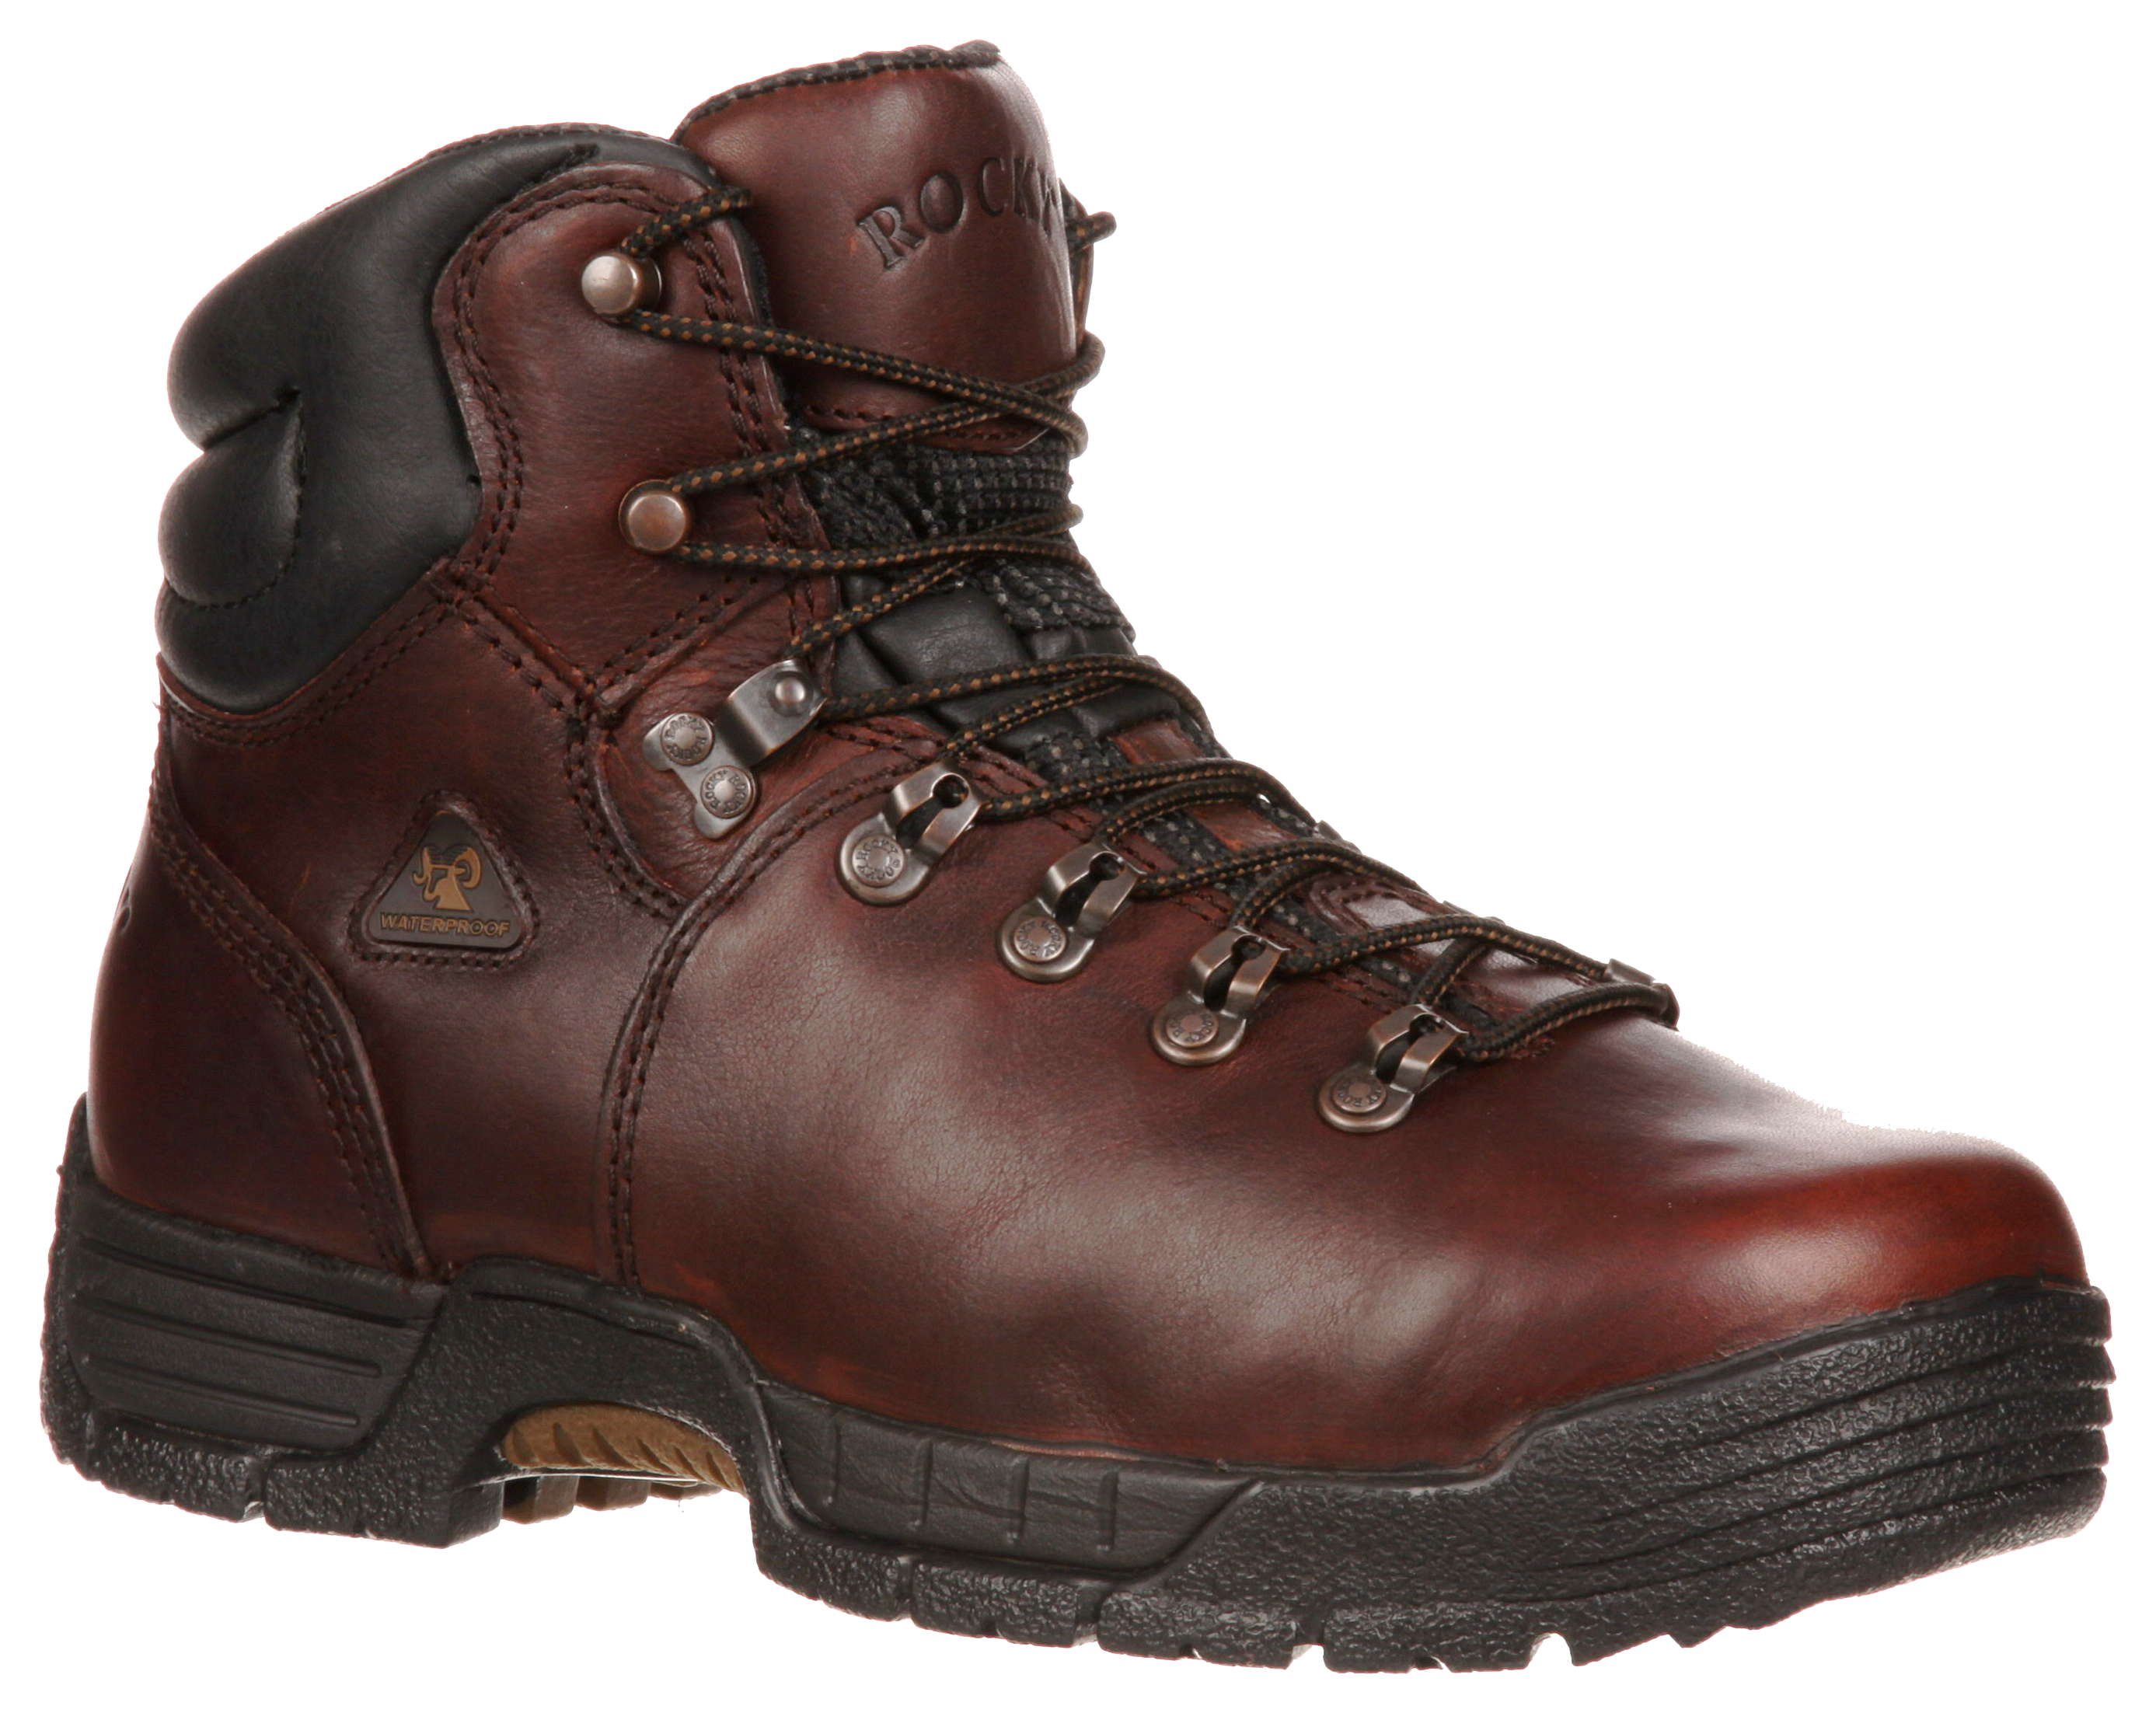 ROCKY MobiLite Waterproof Steel Toe Work Boots for Men - Brown - 12 W